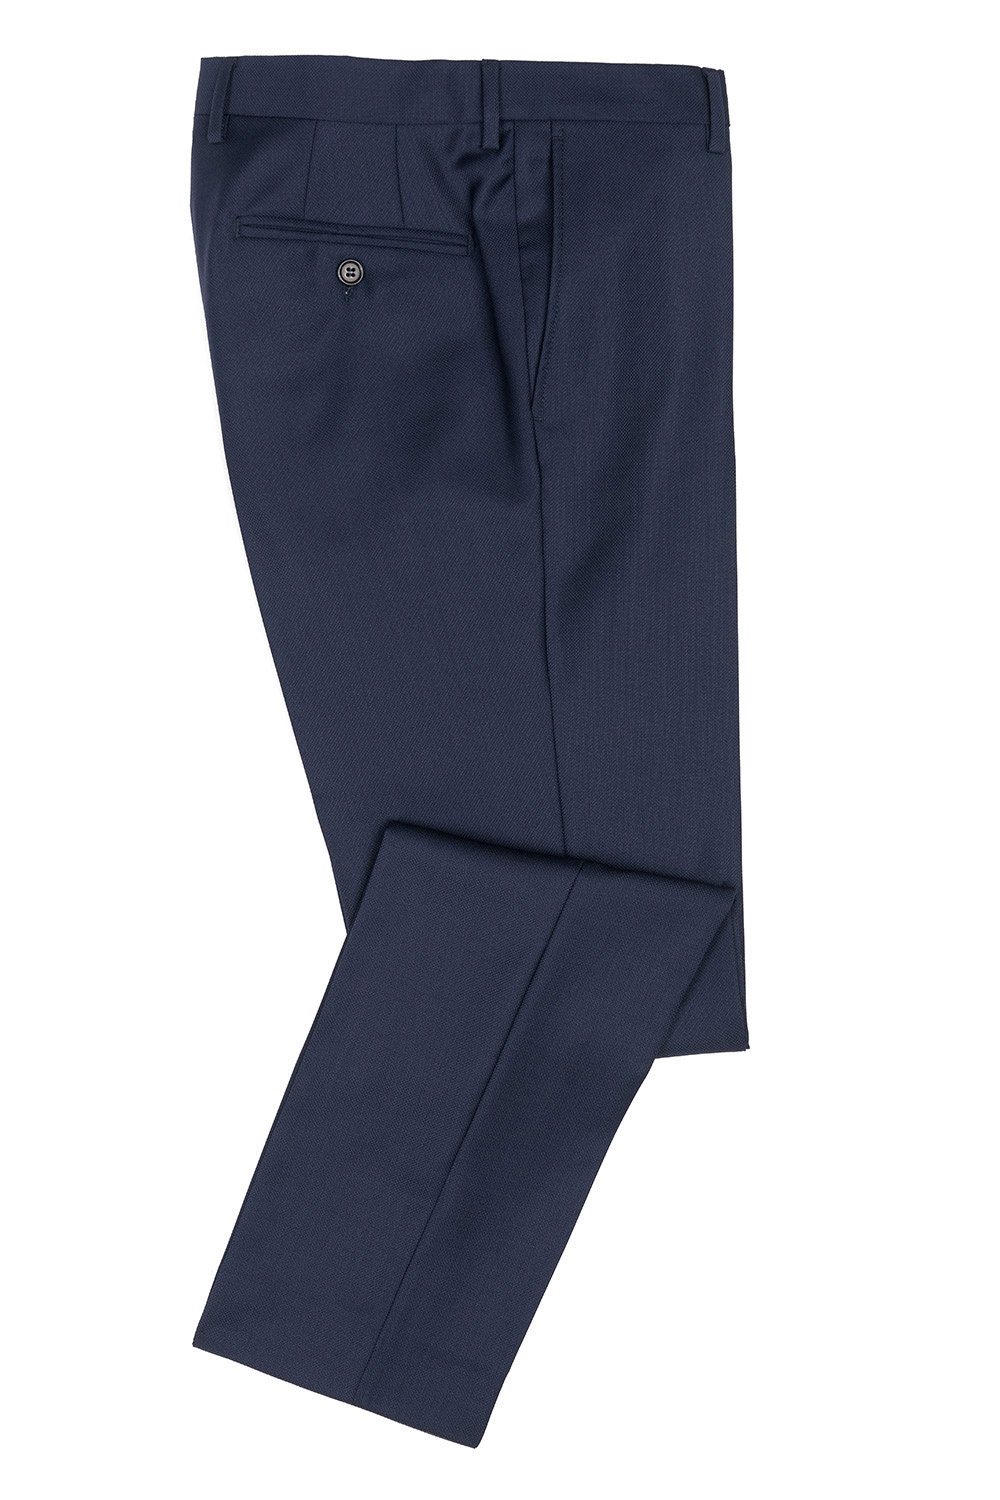 Pantaloni superslim bleumarin uni 0